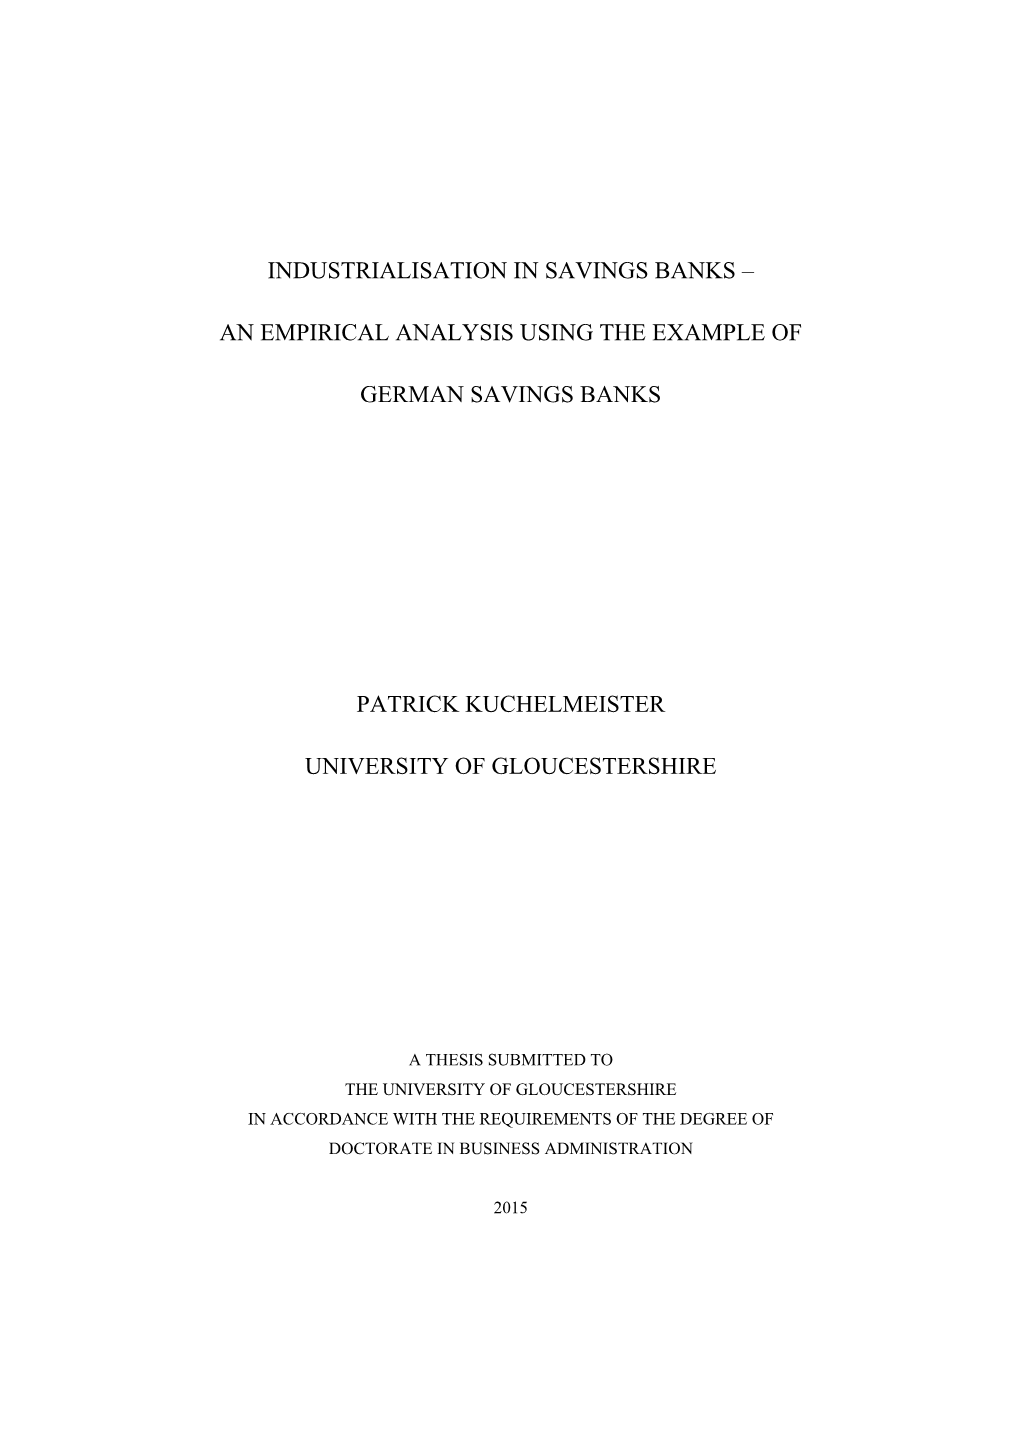 An Empirical Analysis Using the Example of German Savings Banks Patrick Kuchelmeister